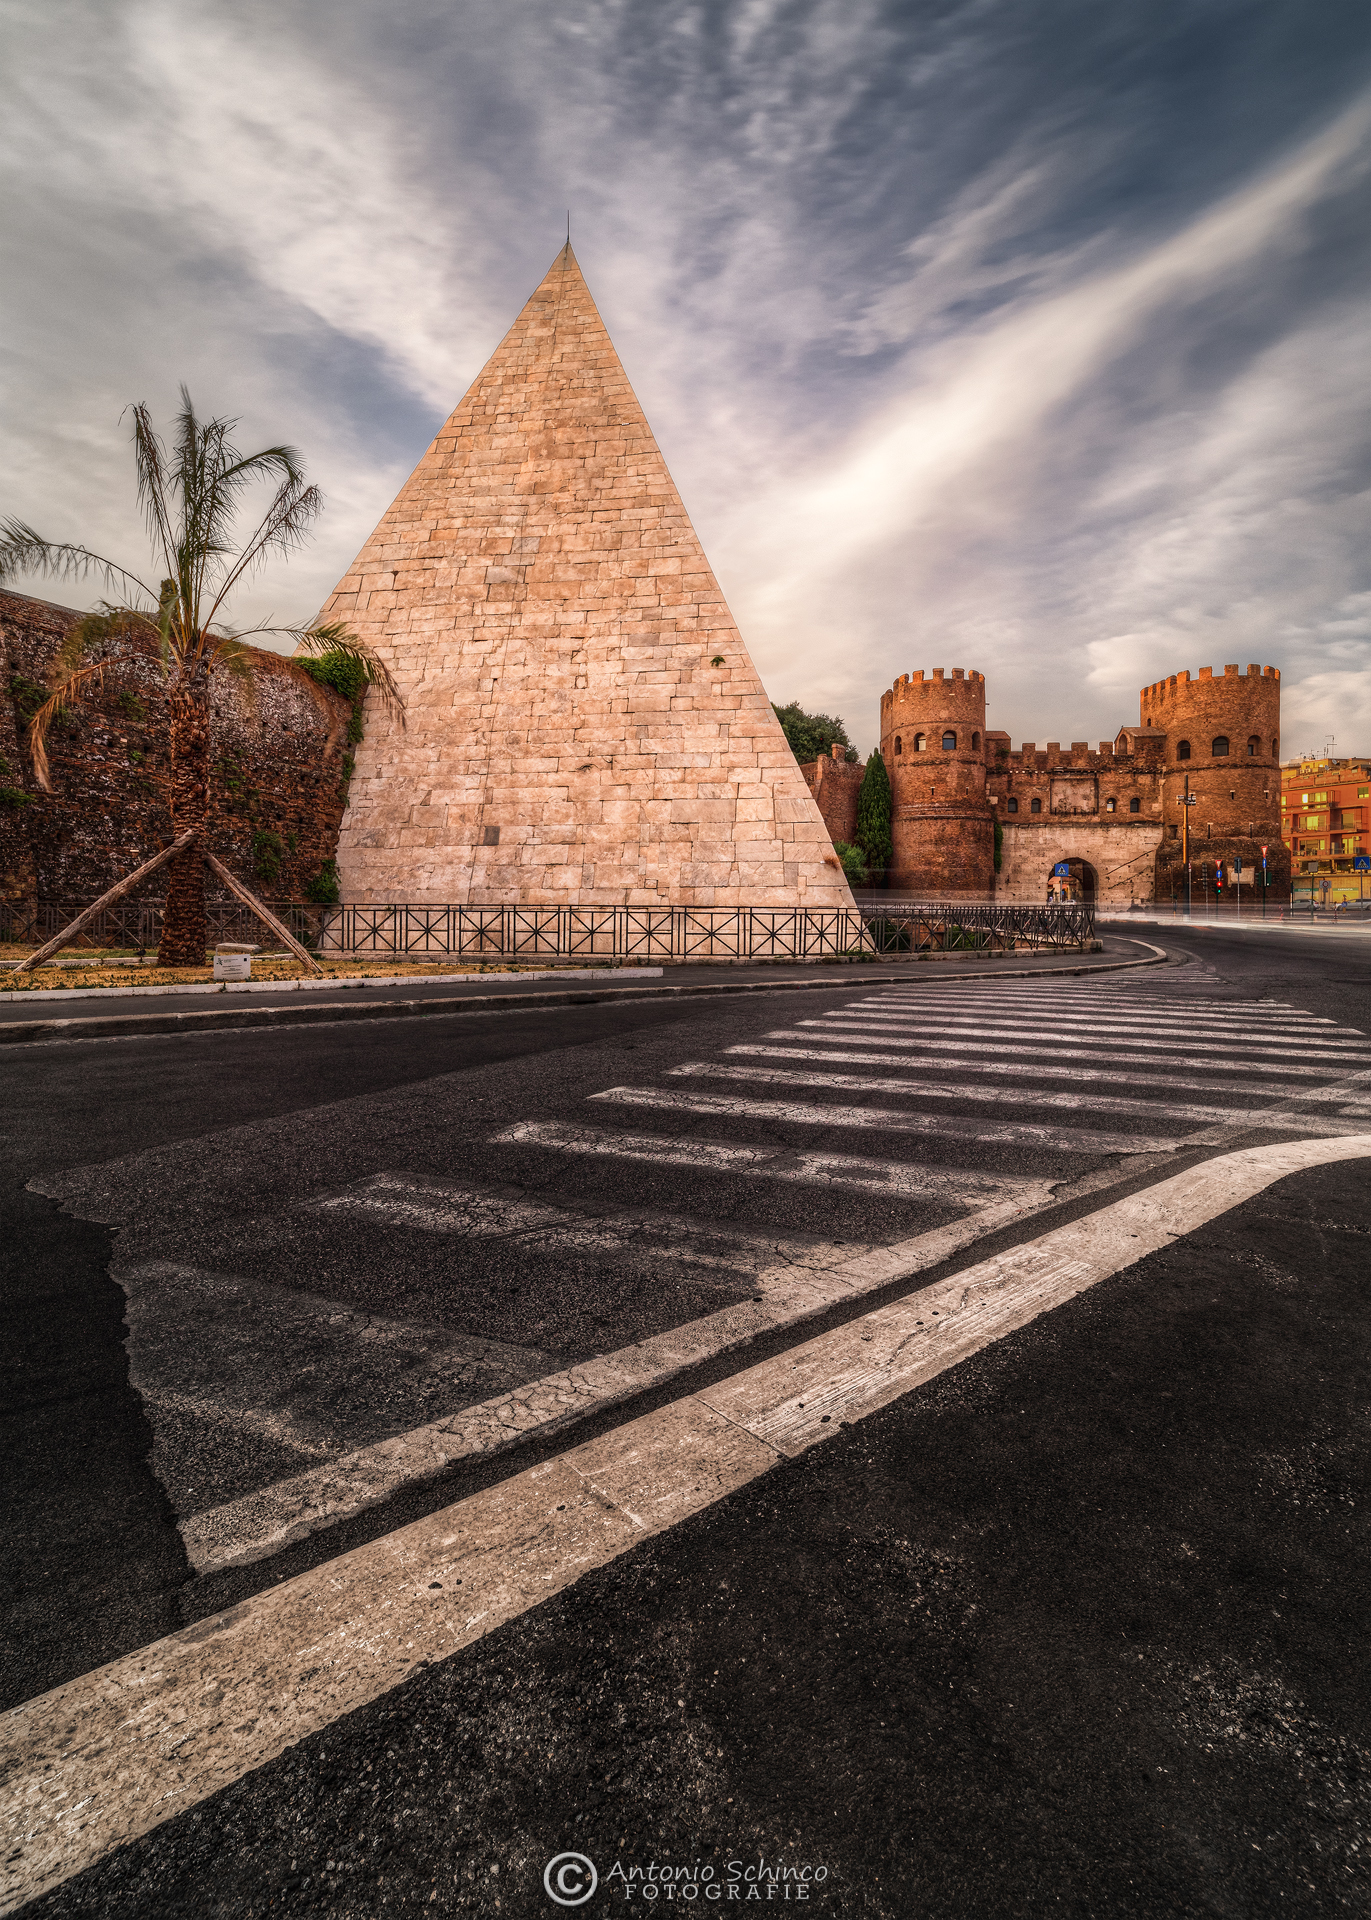 The Pyramid of Cestius ...